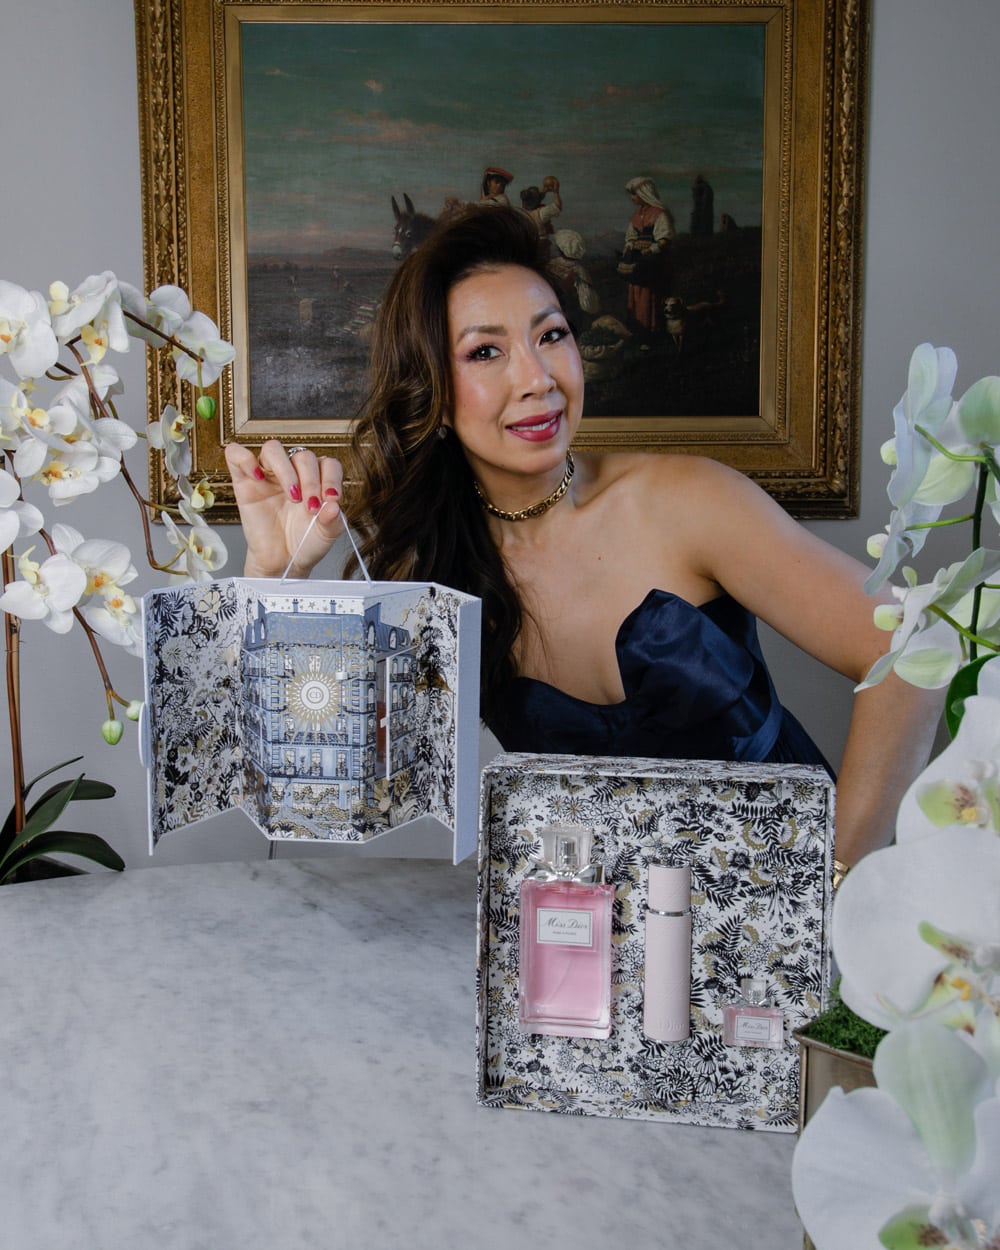 Give Miss Dior Original Extrait de Parfum - Holiday Gift Idea